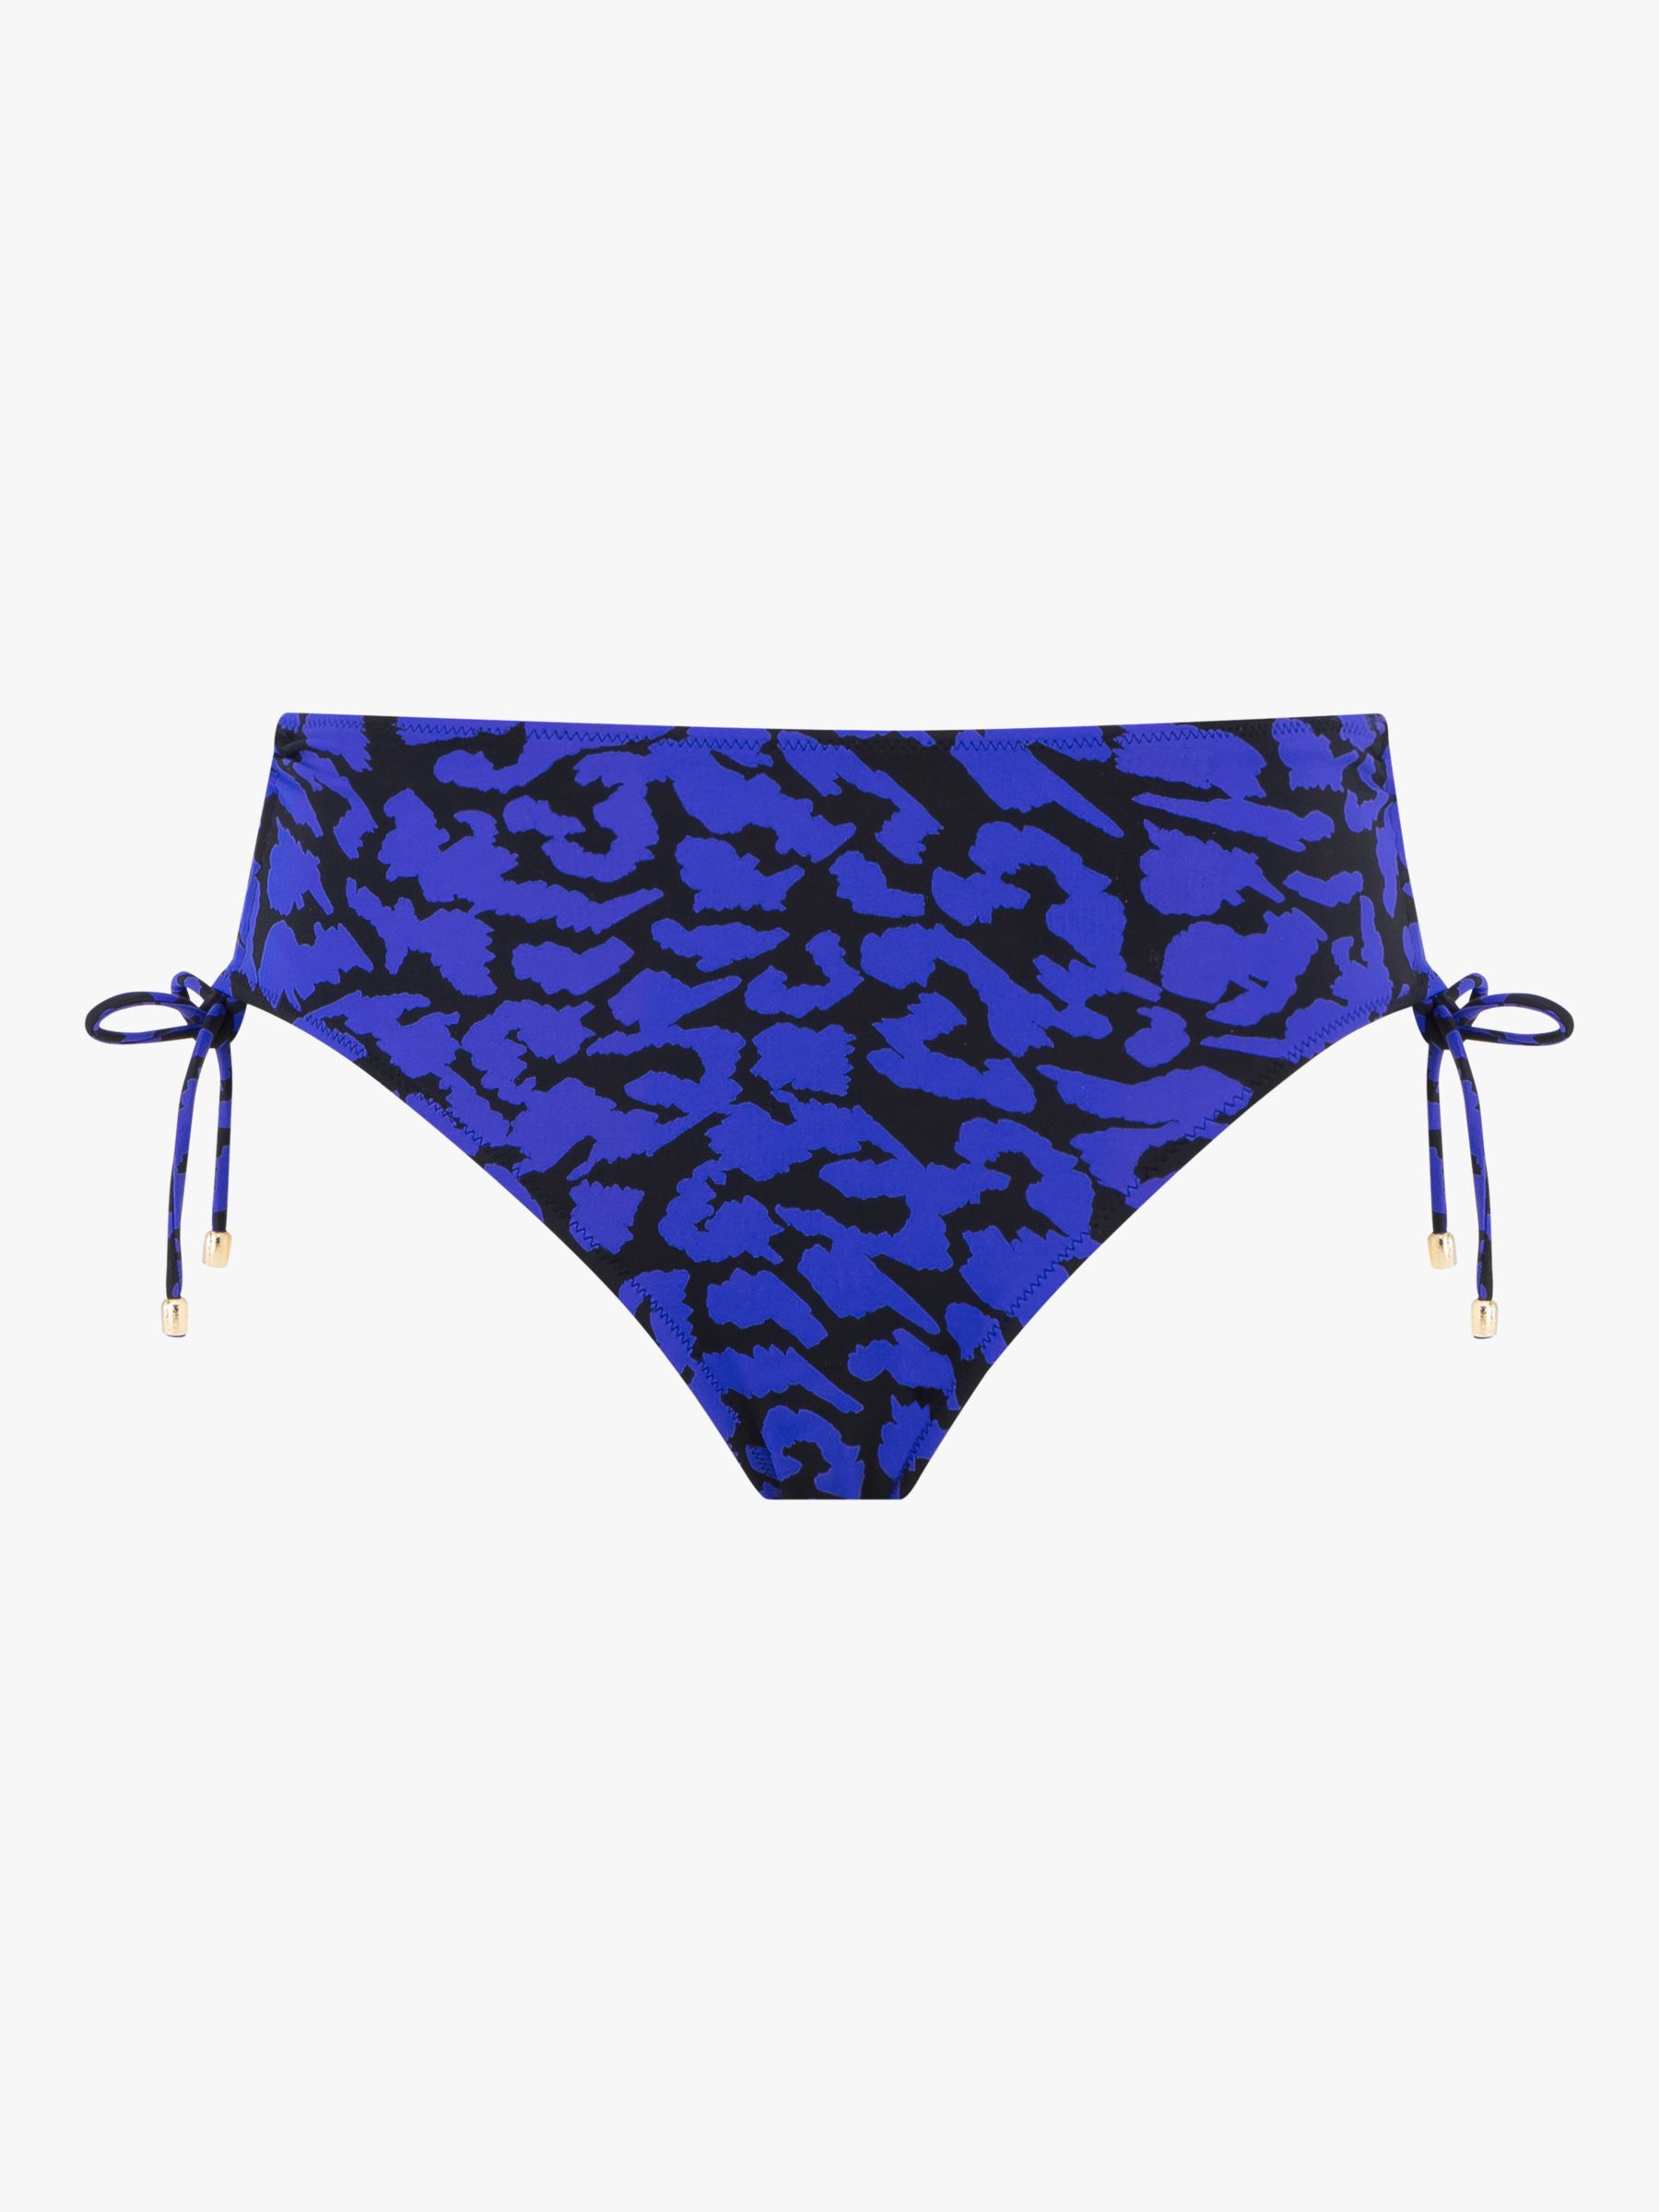 Buy Fantasie Hope Bay Leopard Print Bikini Bottoms, Black/Blue Online at johnlewis.com